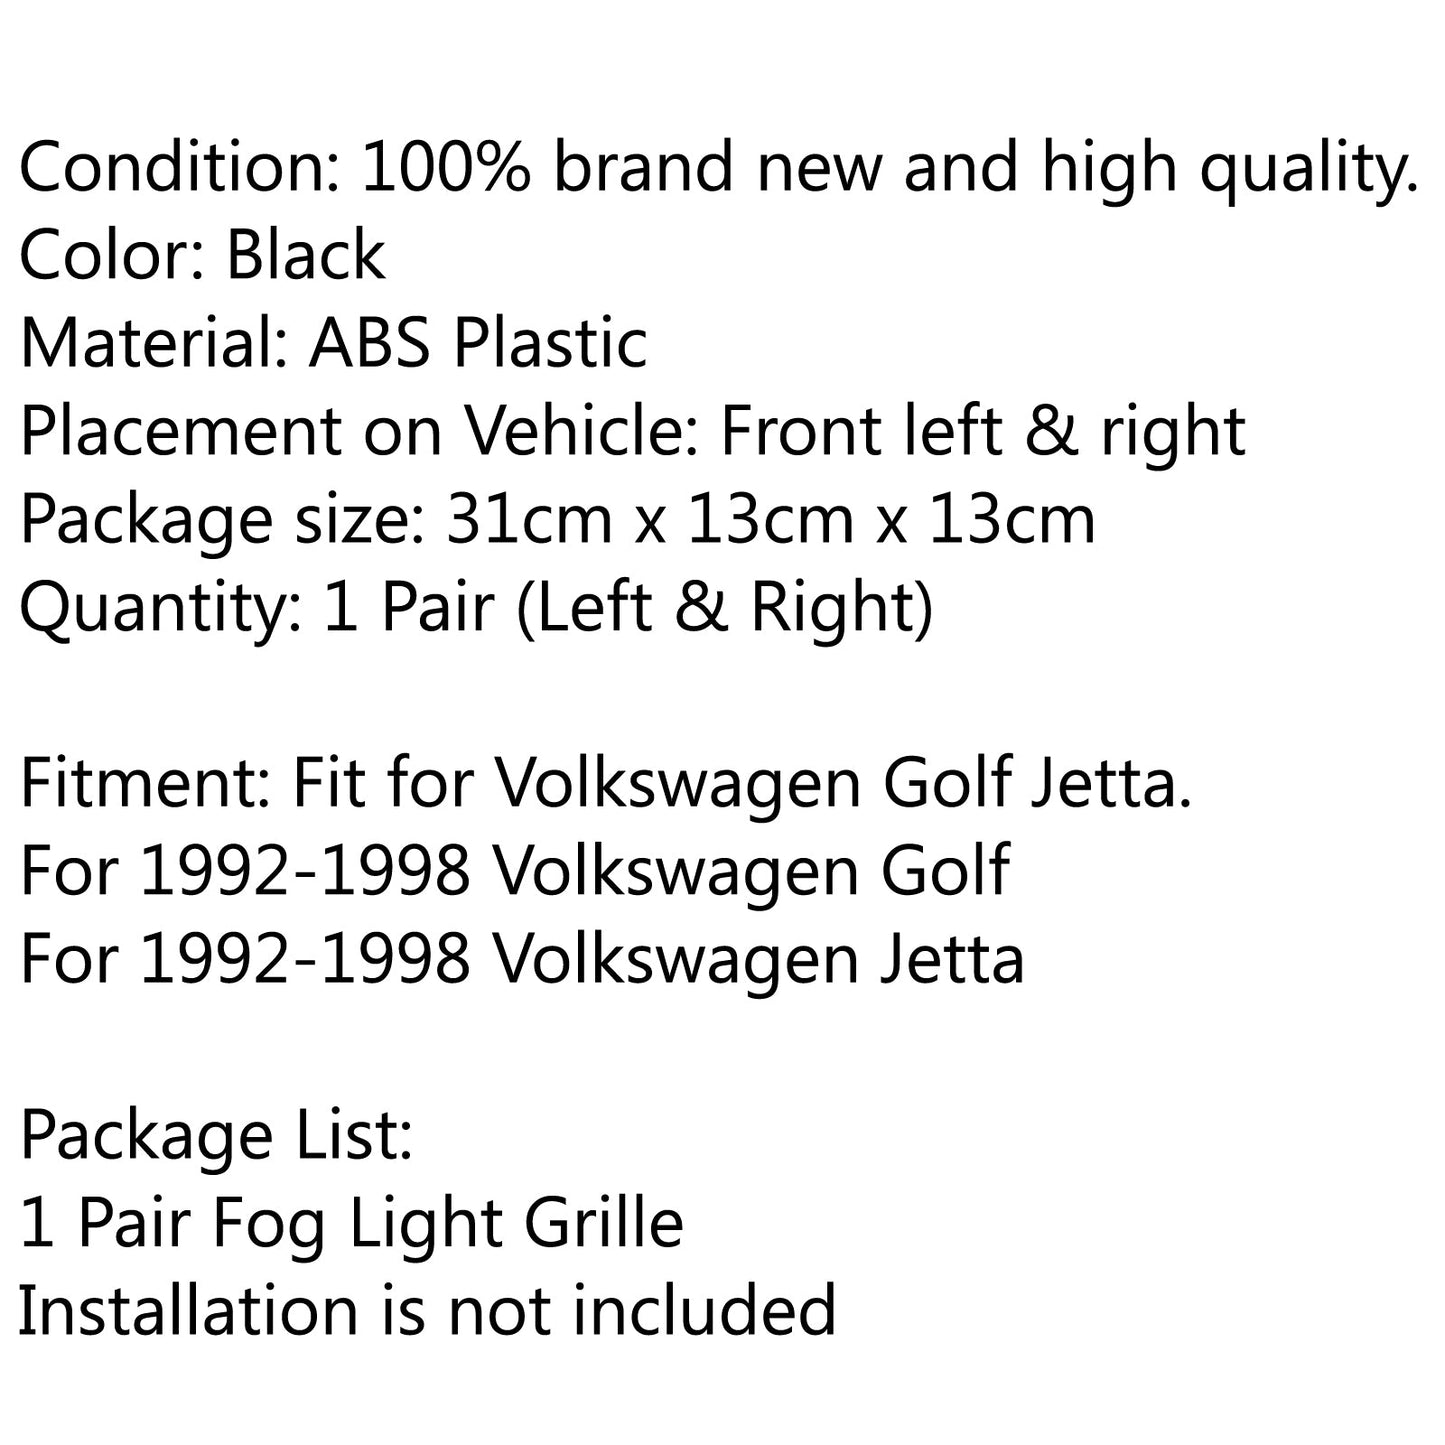 Black Foglight Grill Fog Light Bumper Grille For VW MK3 Golf 1992-1997